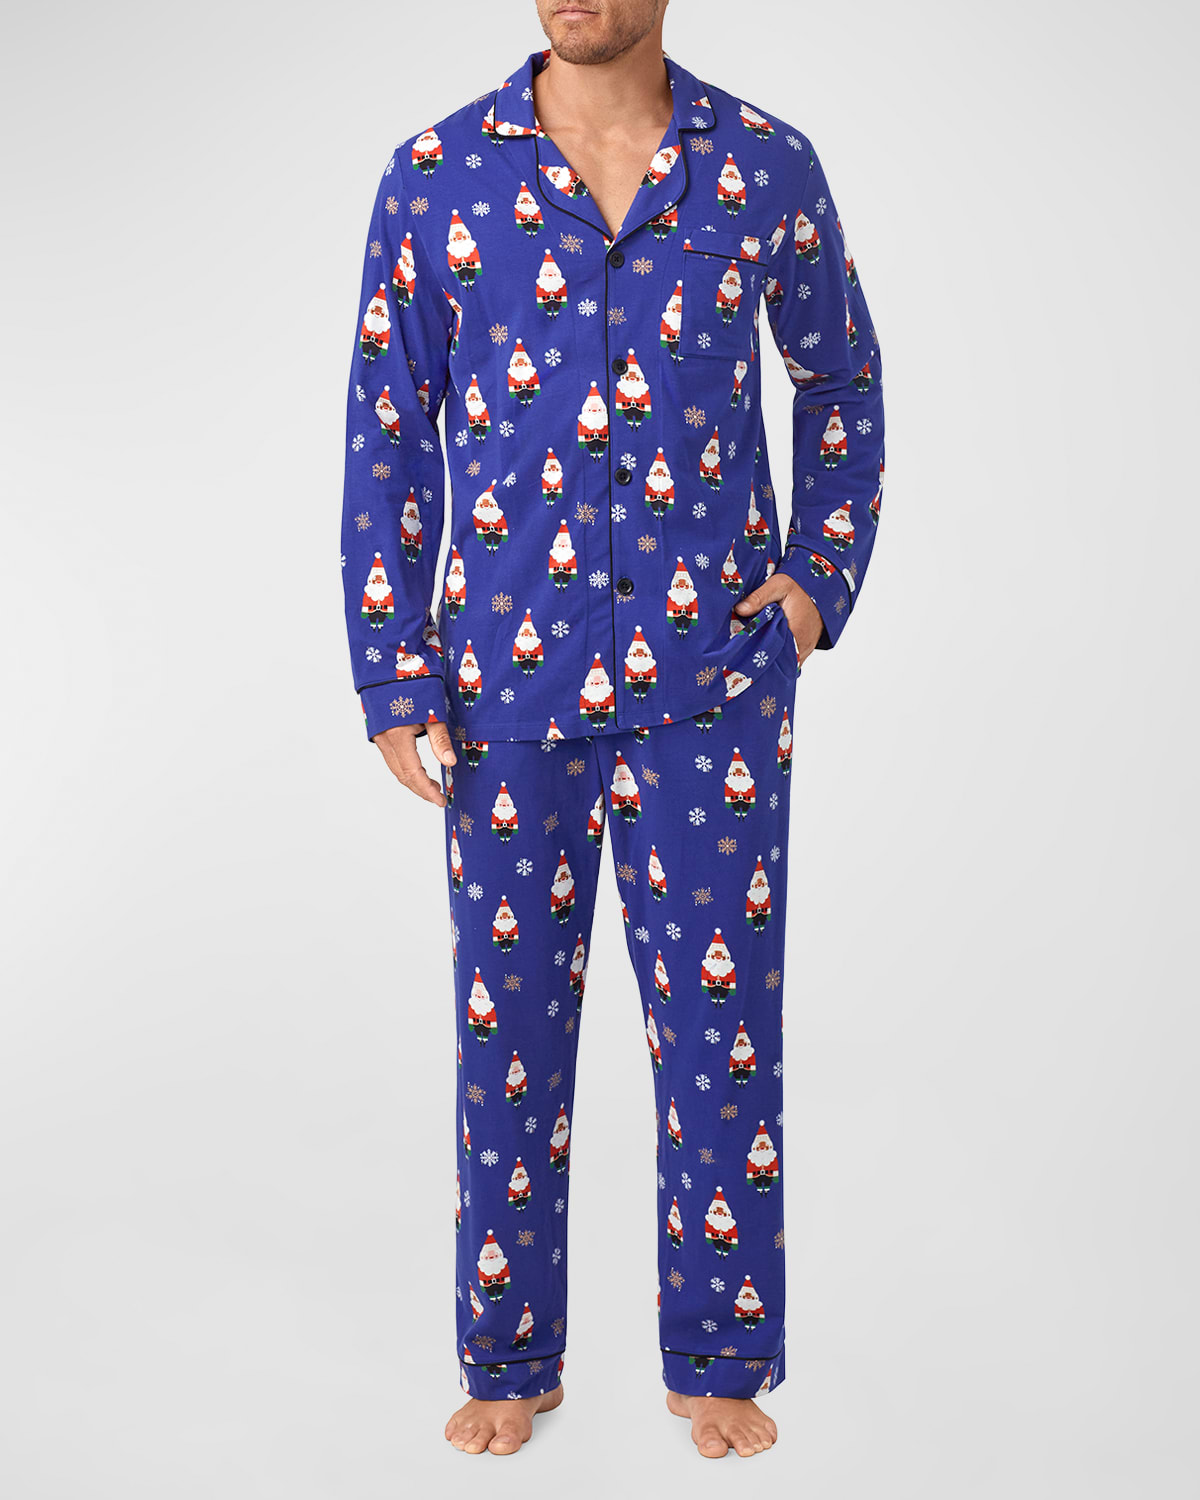 Bedhead Pajamas Men's Santa Claus Classic Long-sleeve Pj Set